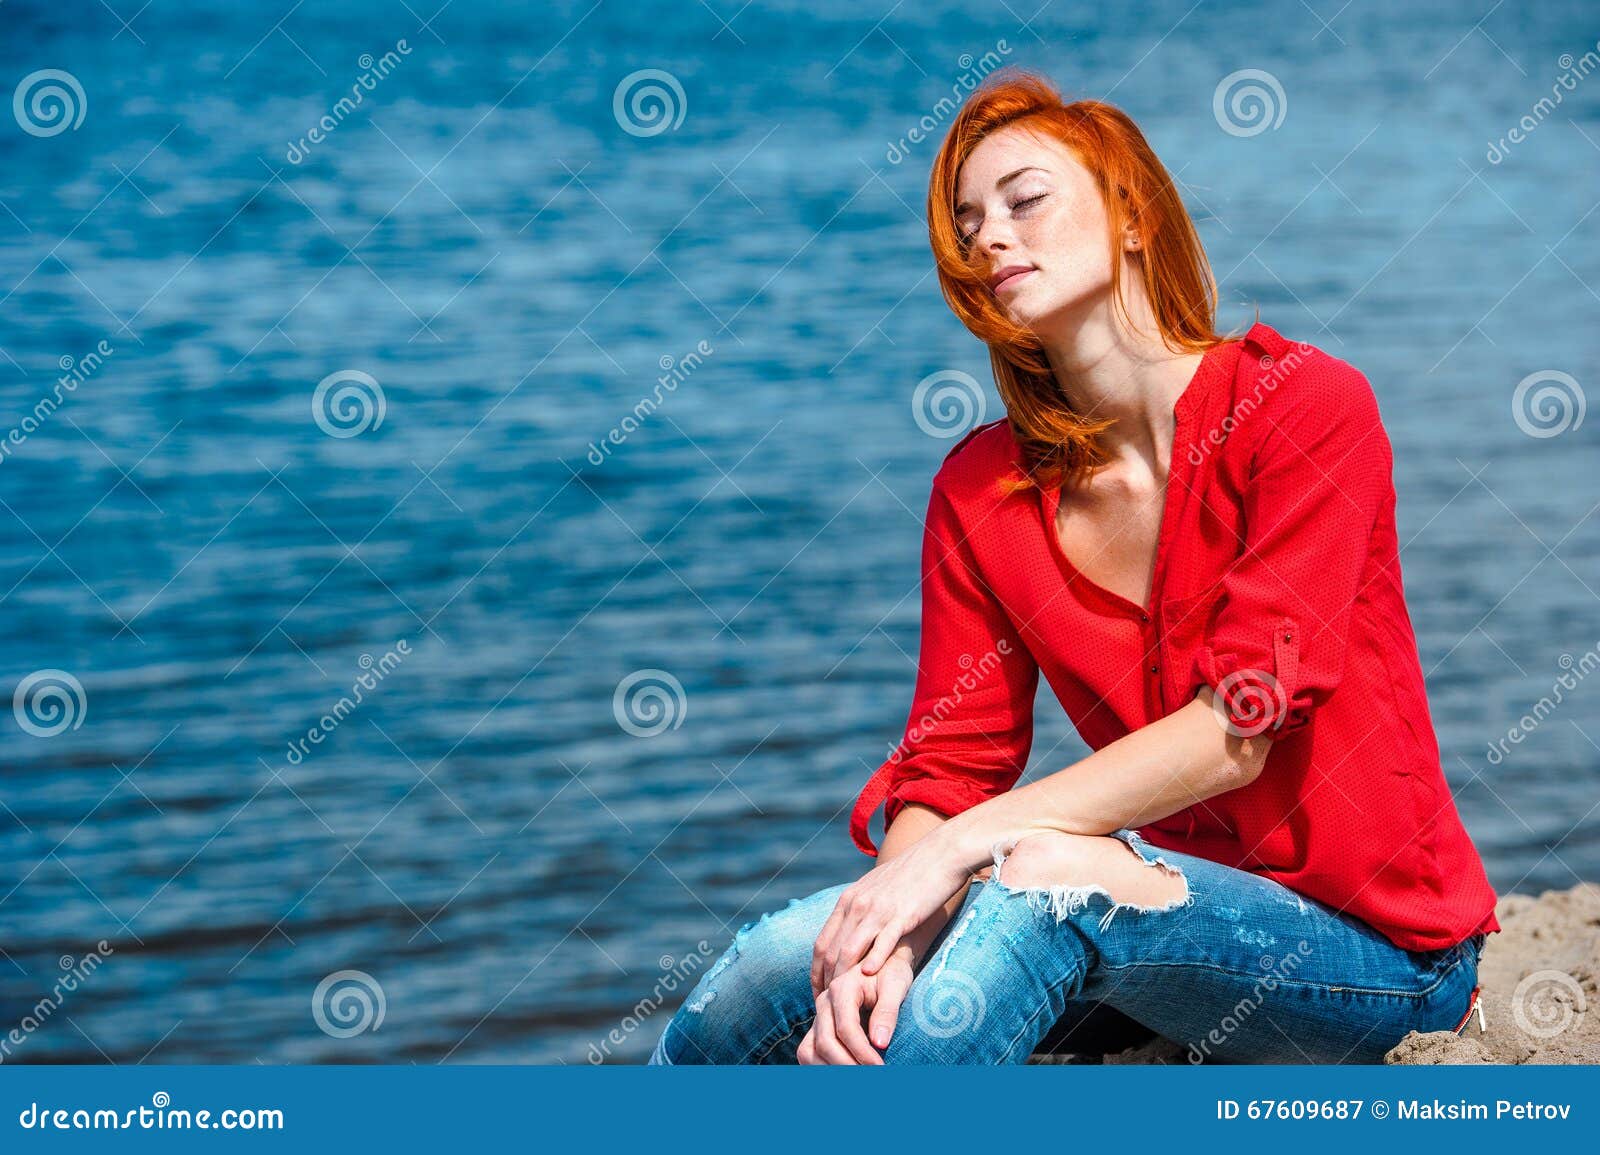 joyful serene redhead woman sitting comfortably